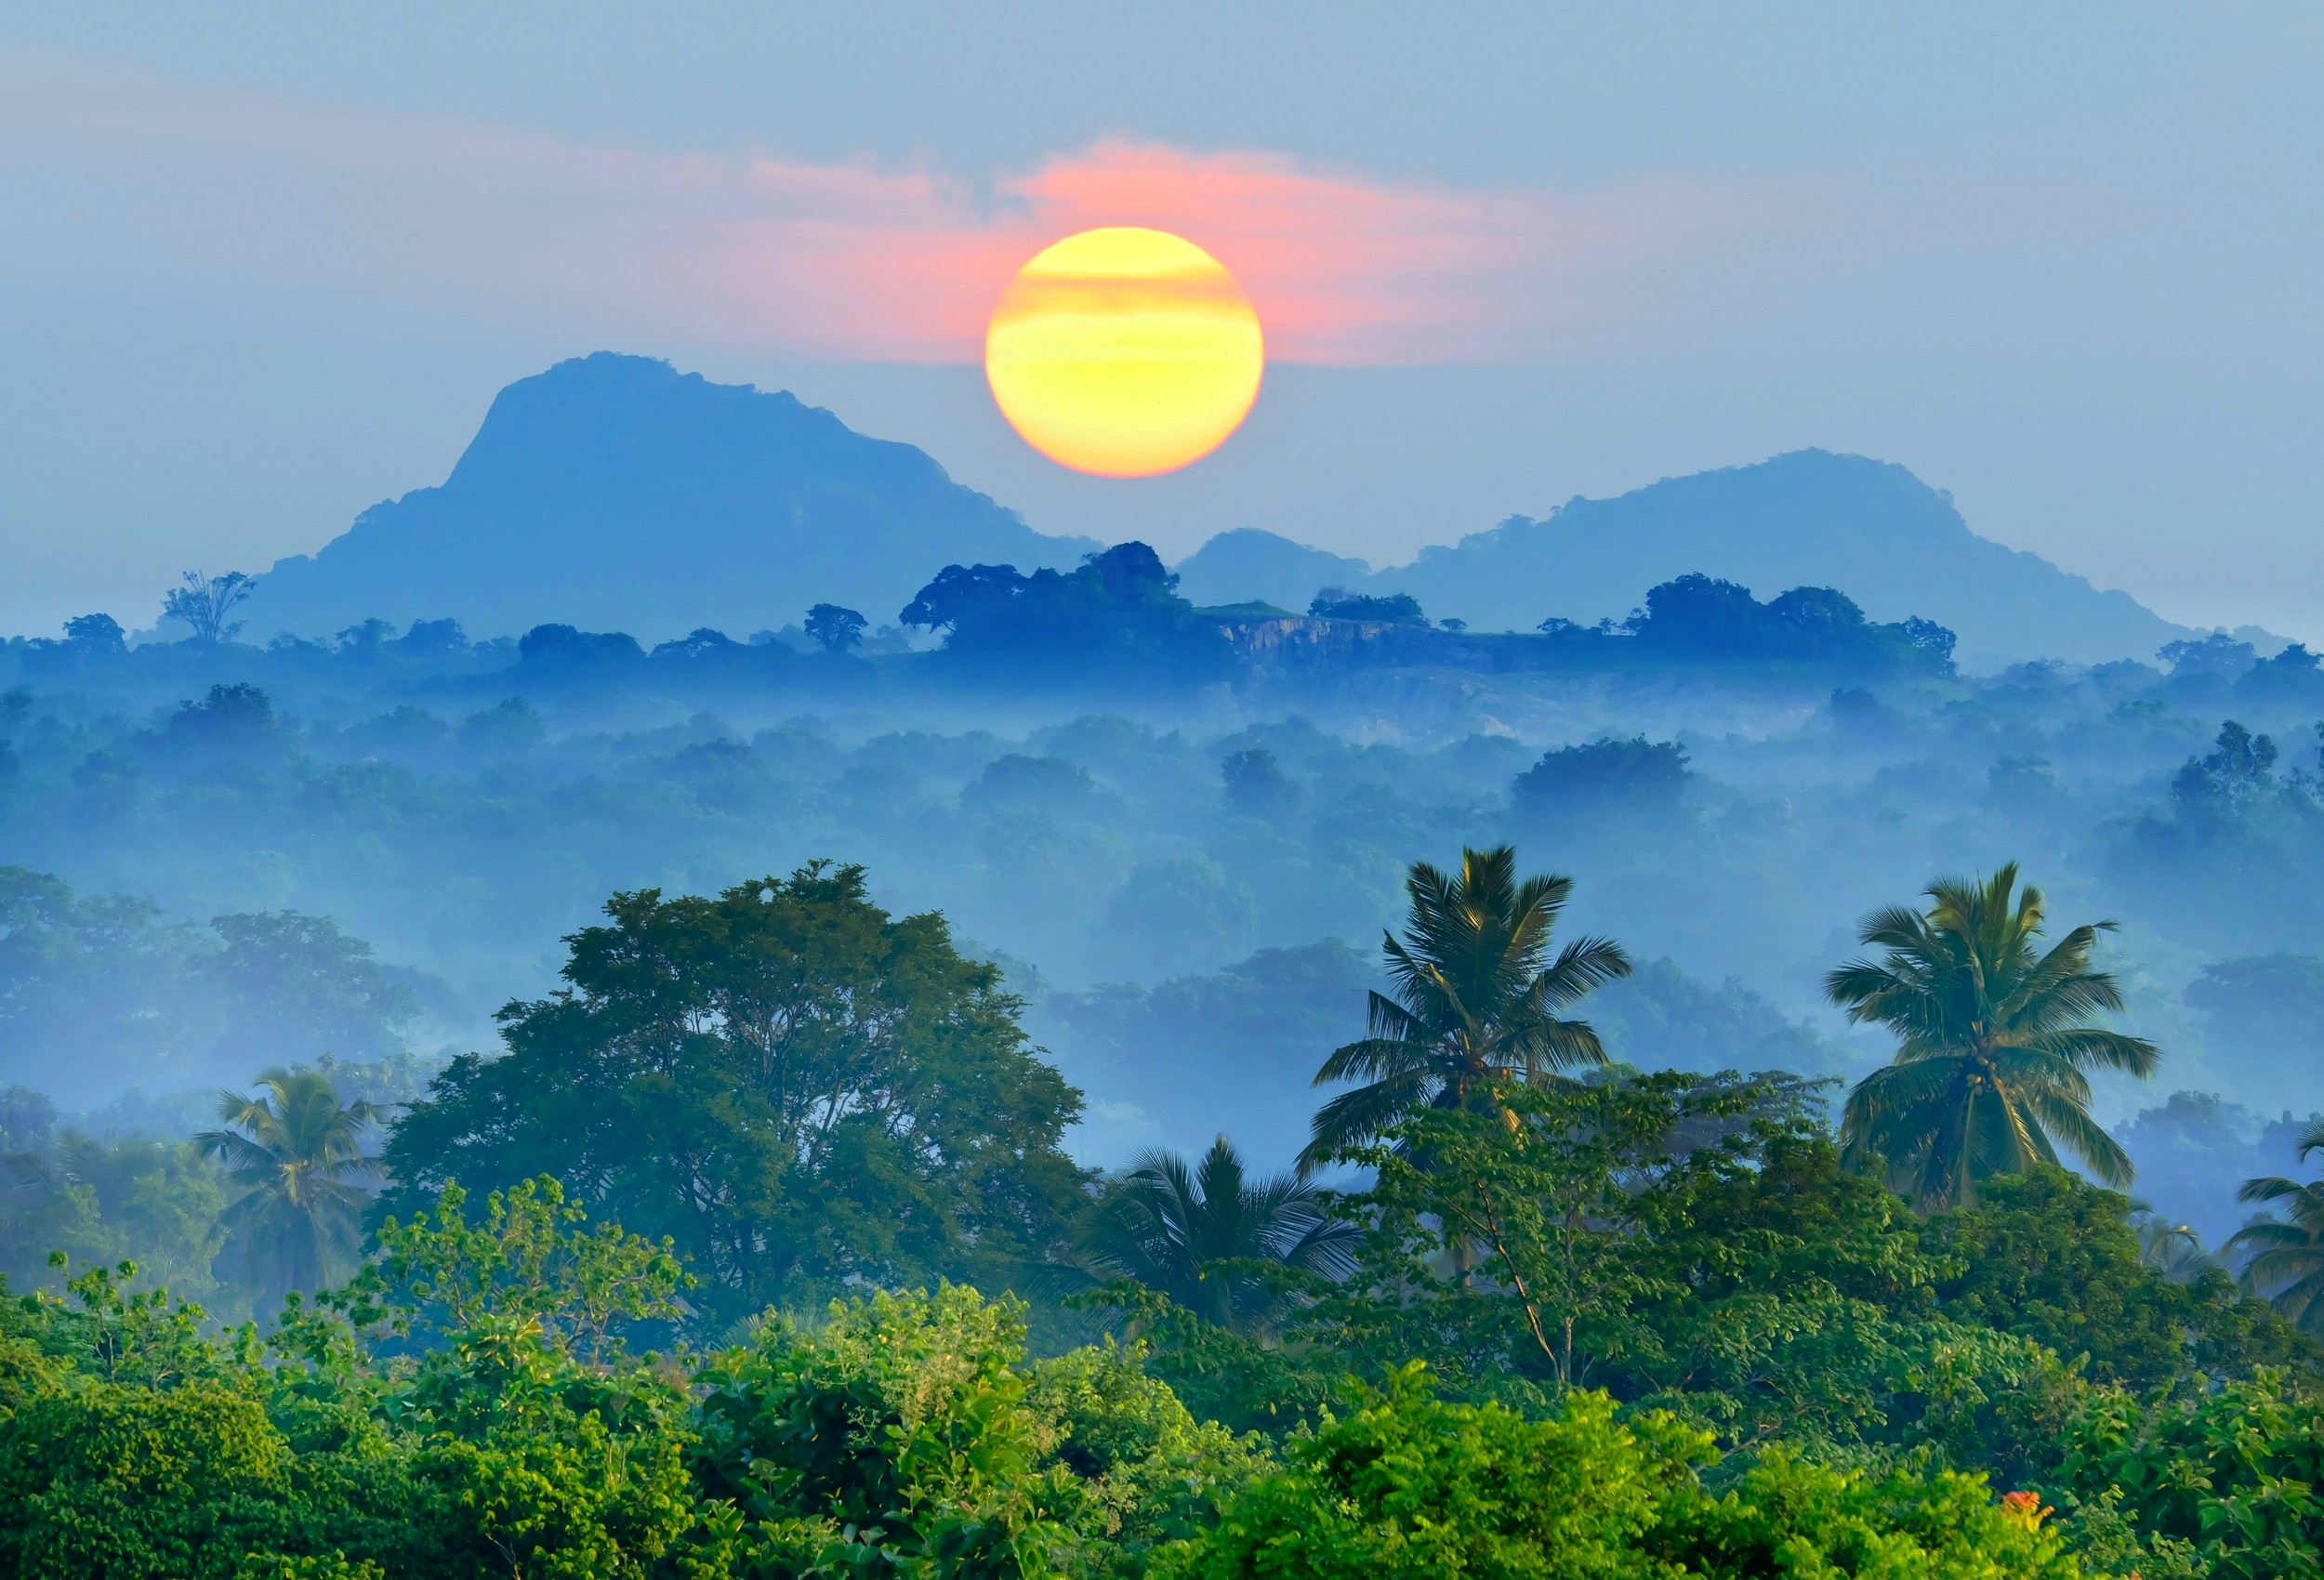 General 2500x1700 nature landscape mist sunset mountains blue forest palm trees tropical